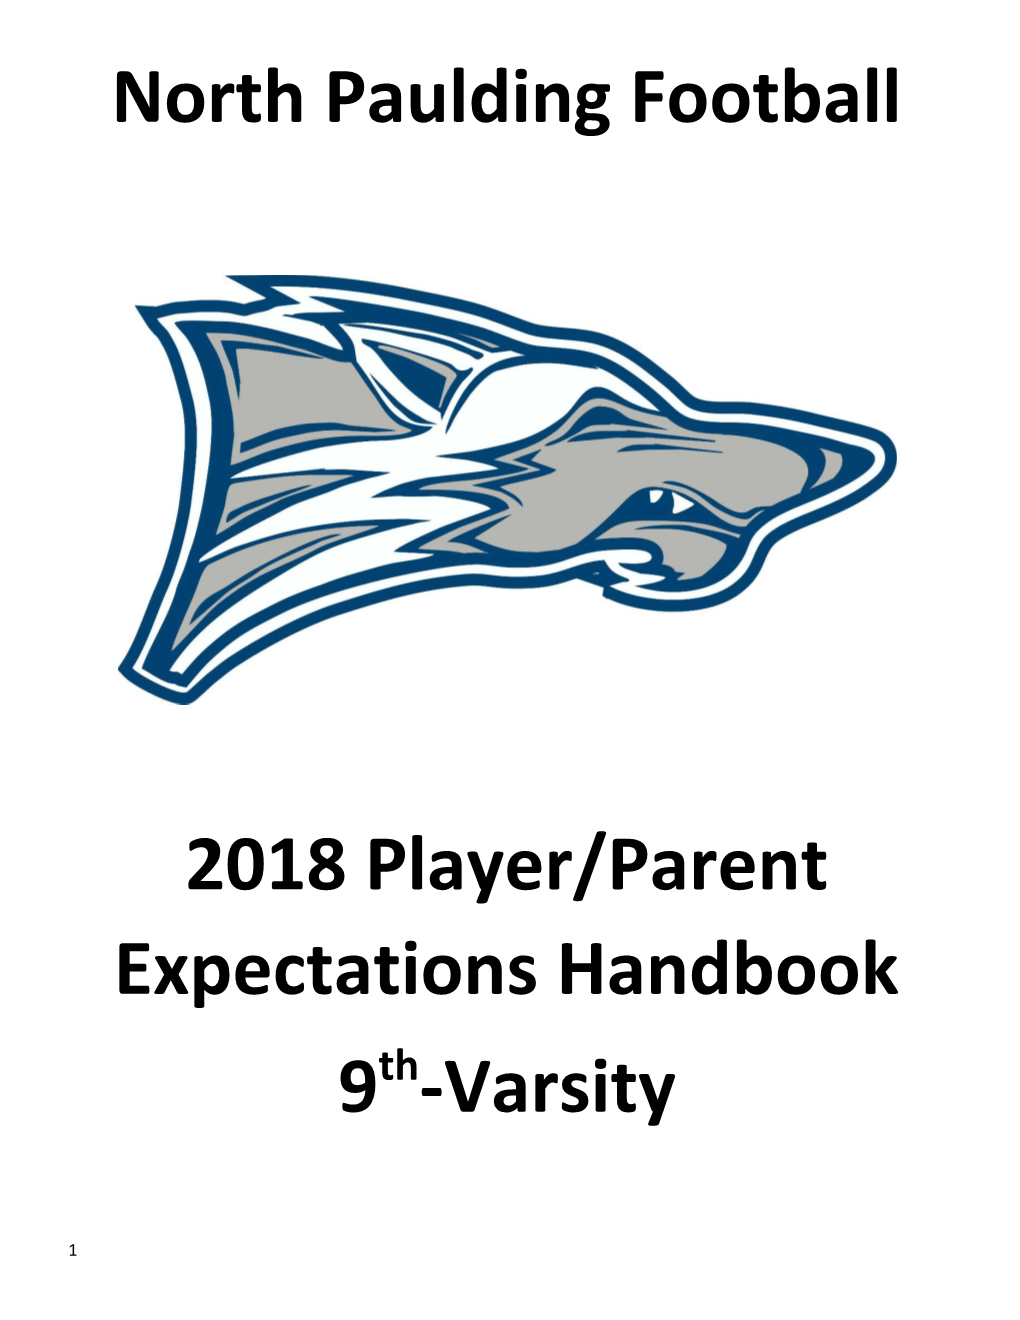 2018 Player/Parent Expectations Handbook